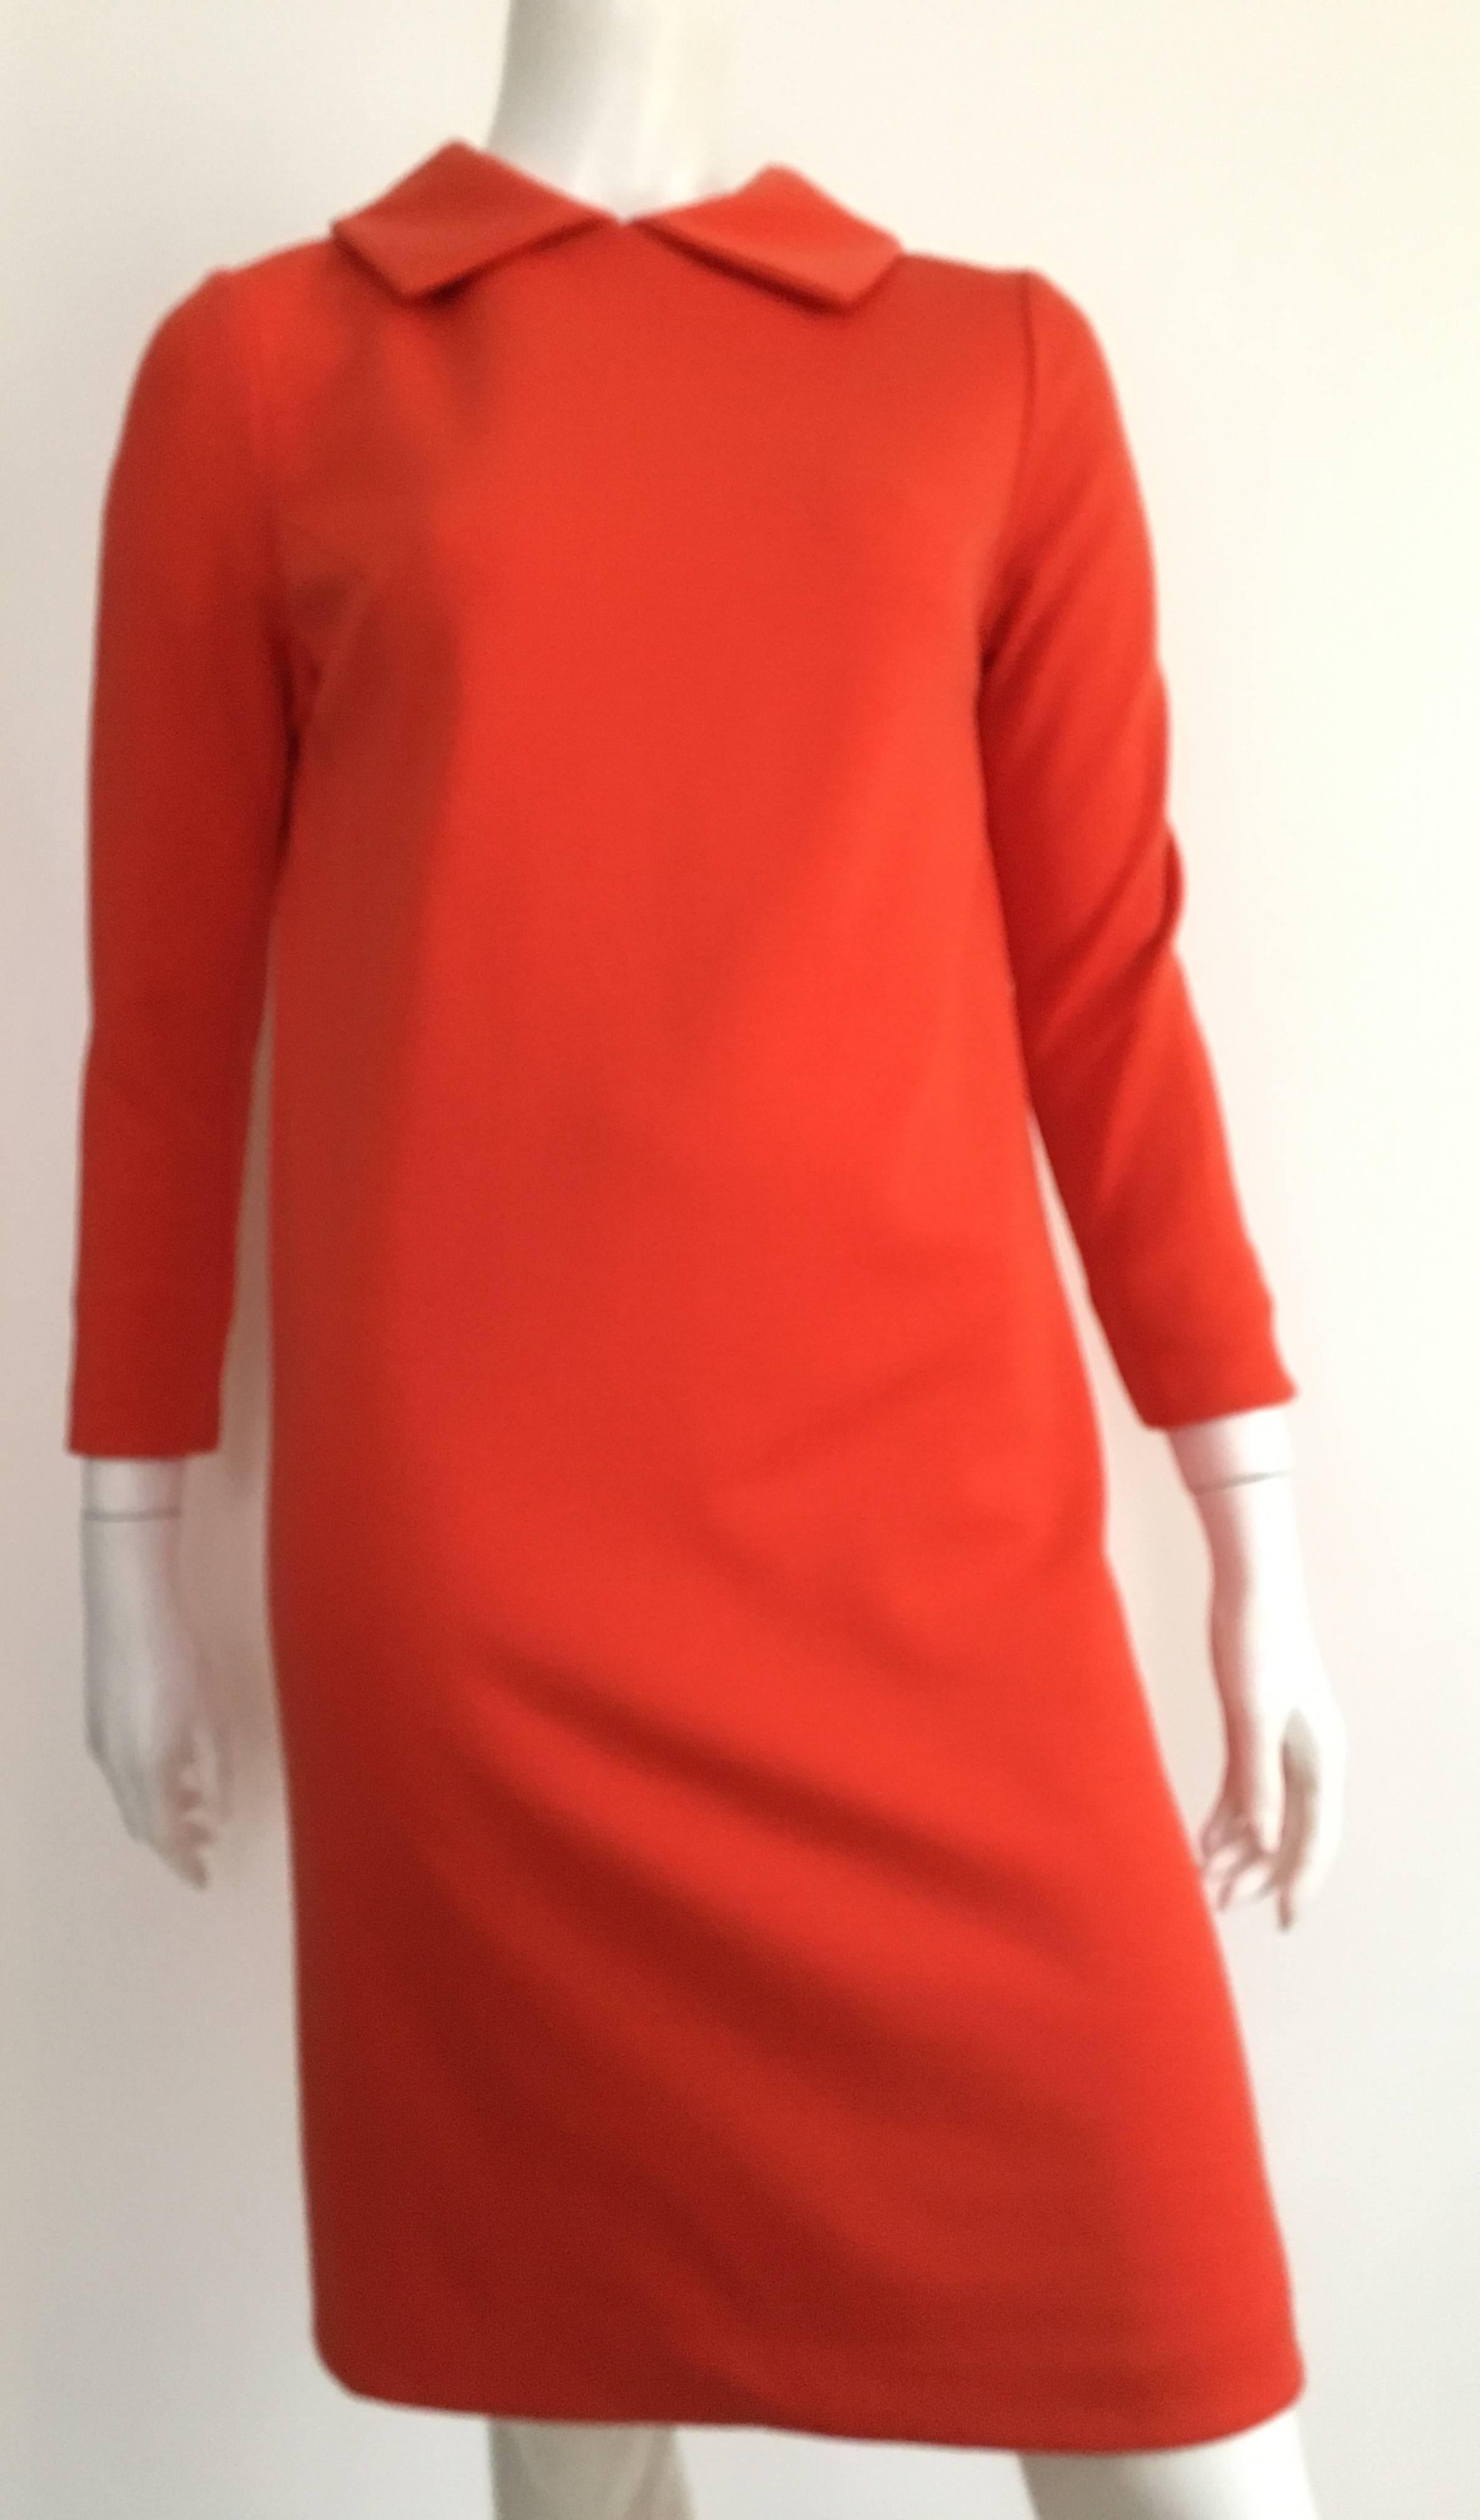 Bill Blass for Maurice Rentner 1960s Orange Wool Knit Dress Size 6. 4